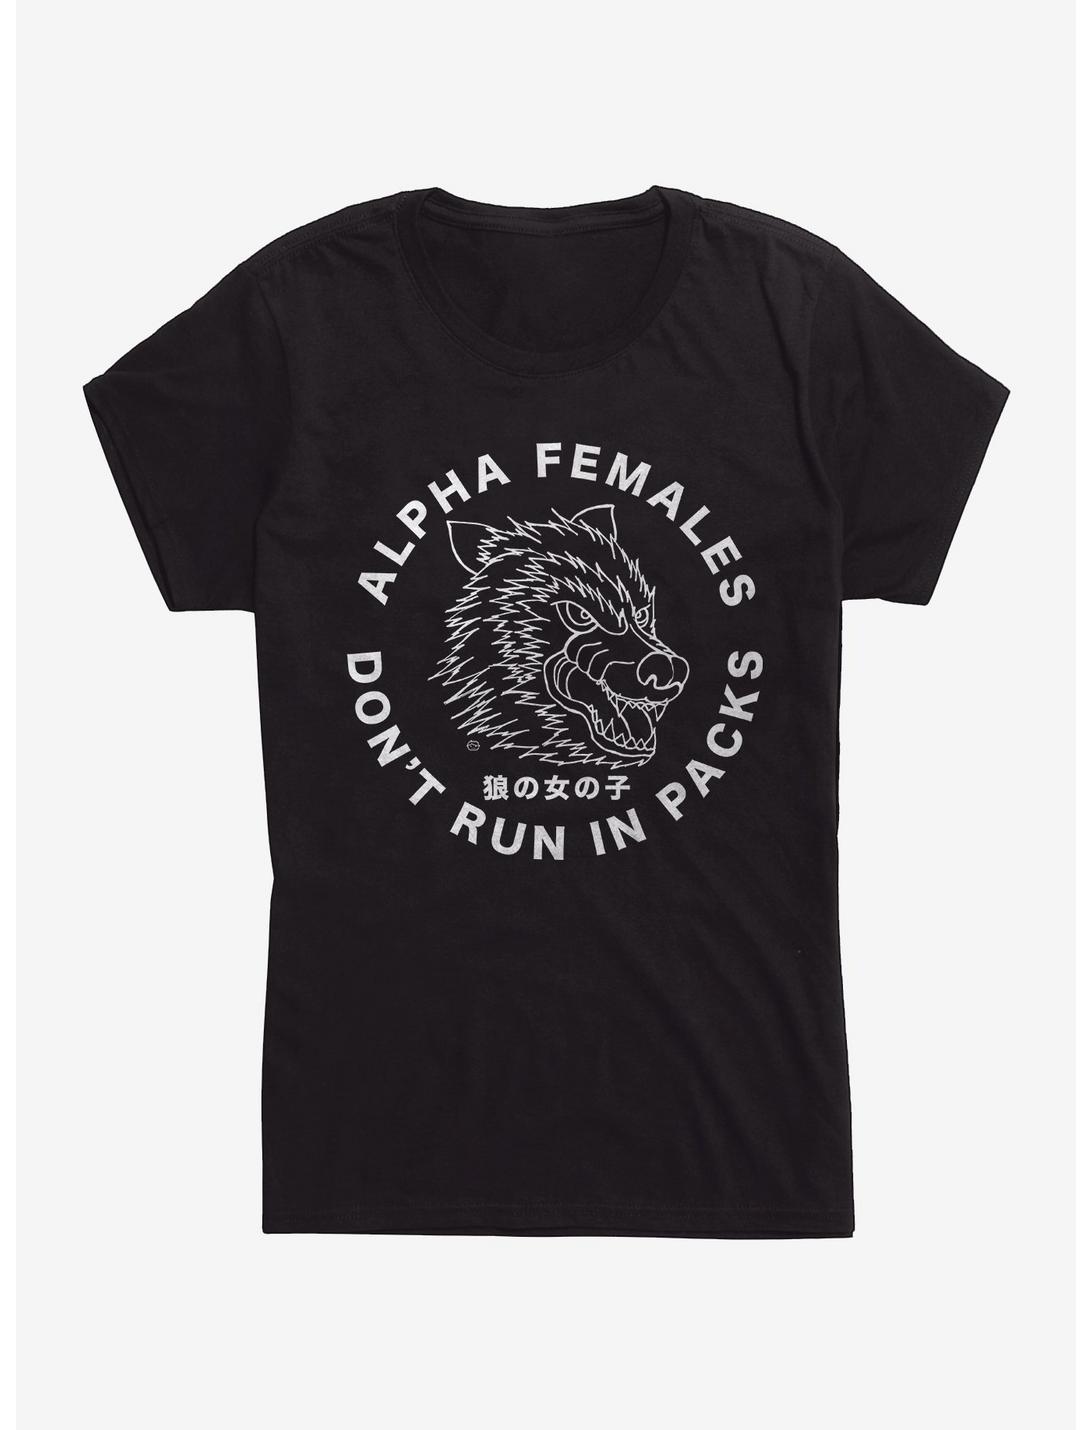 Don't Run In Packs Womens T-Shirt, BLACK, hi-res